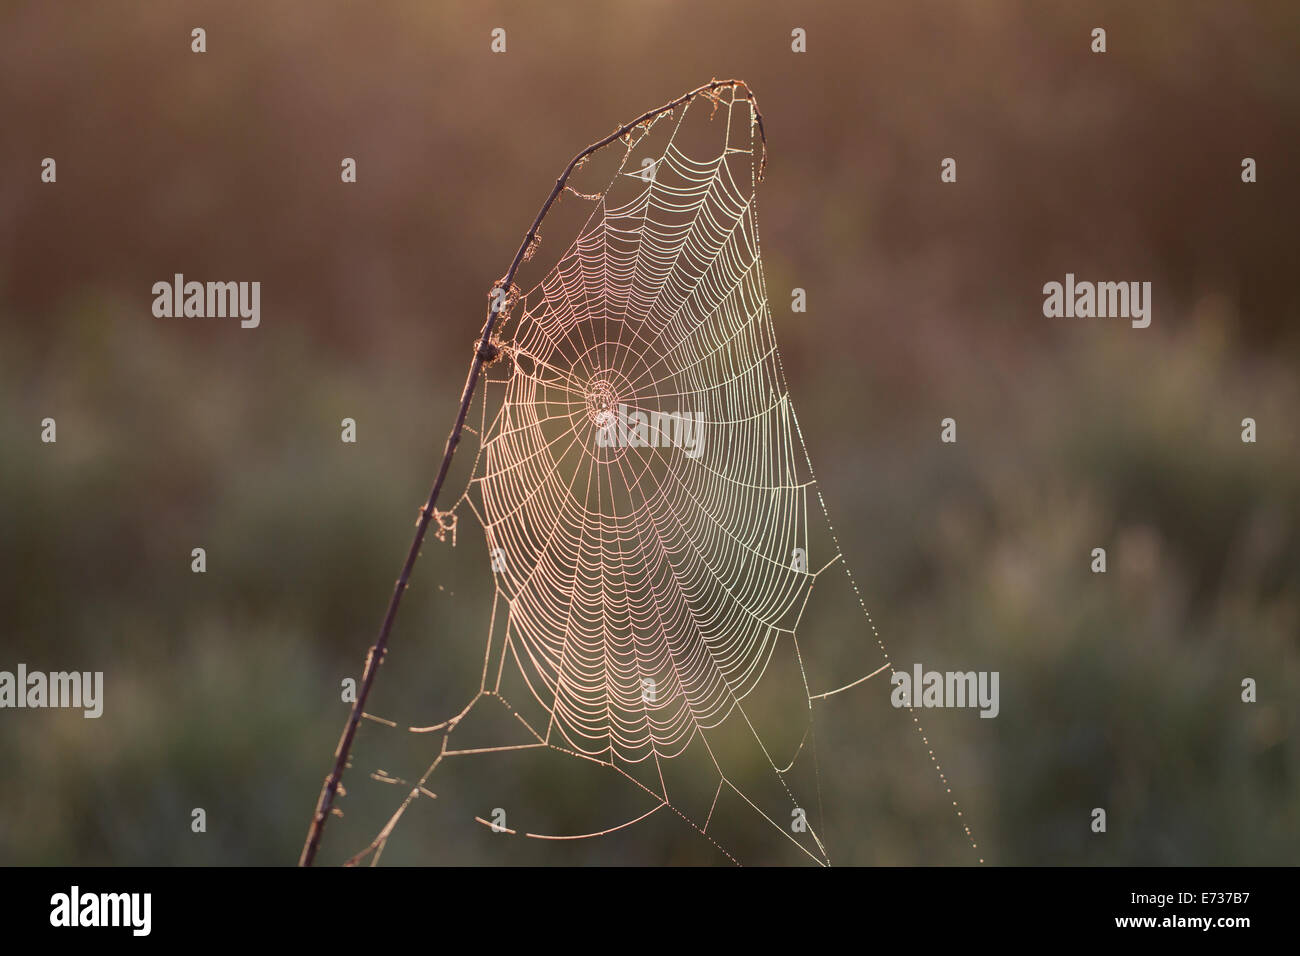 Im Spinnennetz Morgentau Spider web dans la rosée du matin Banque D'Images